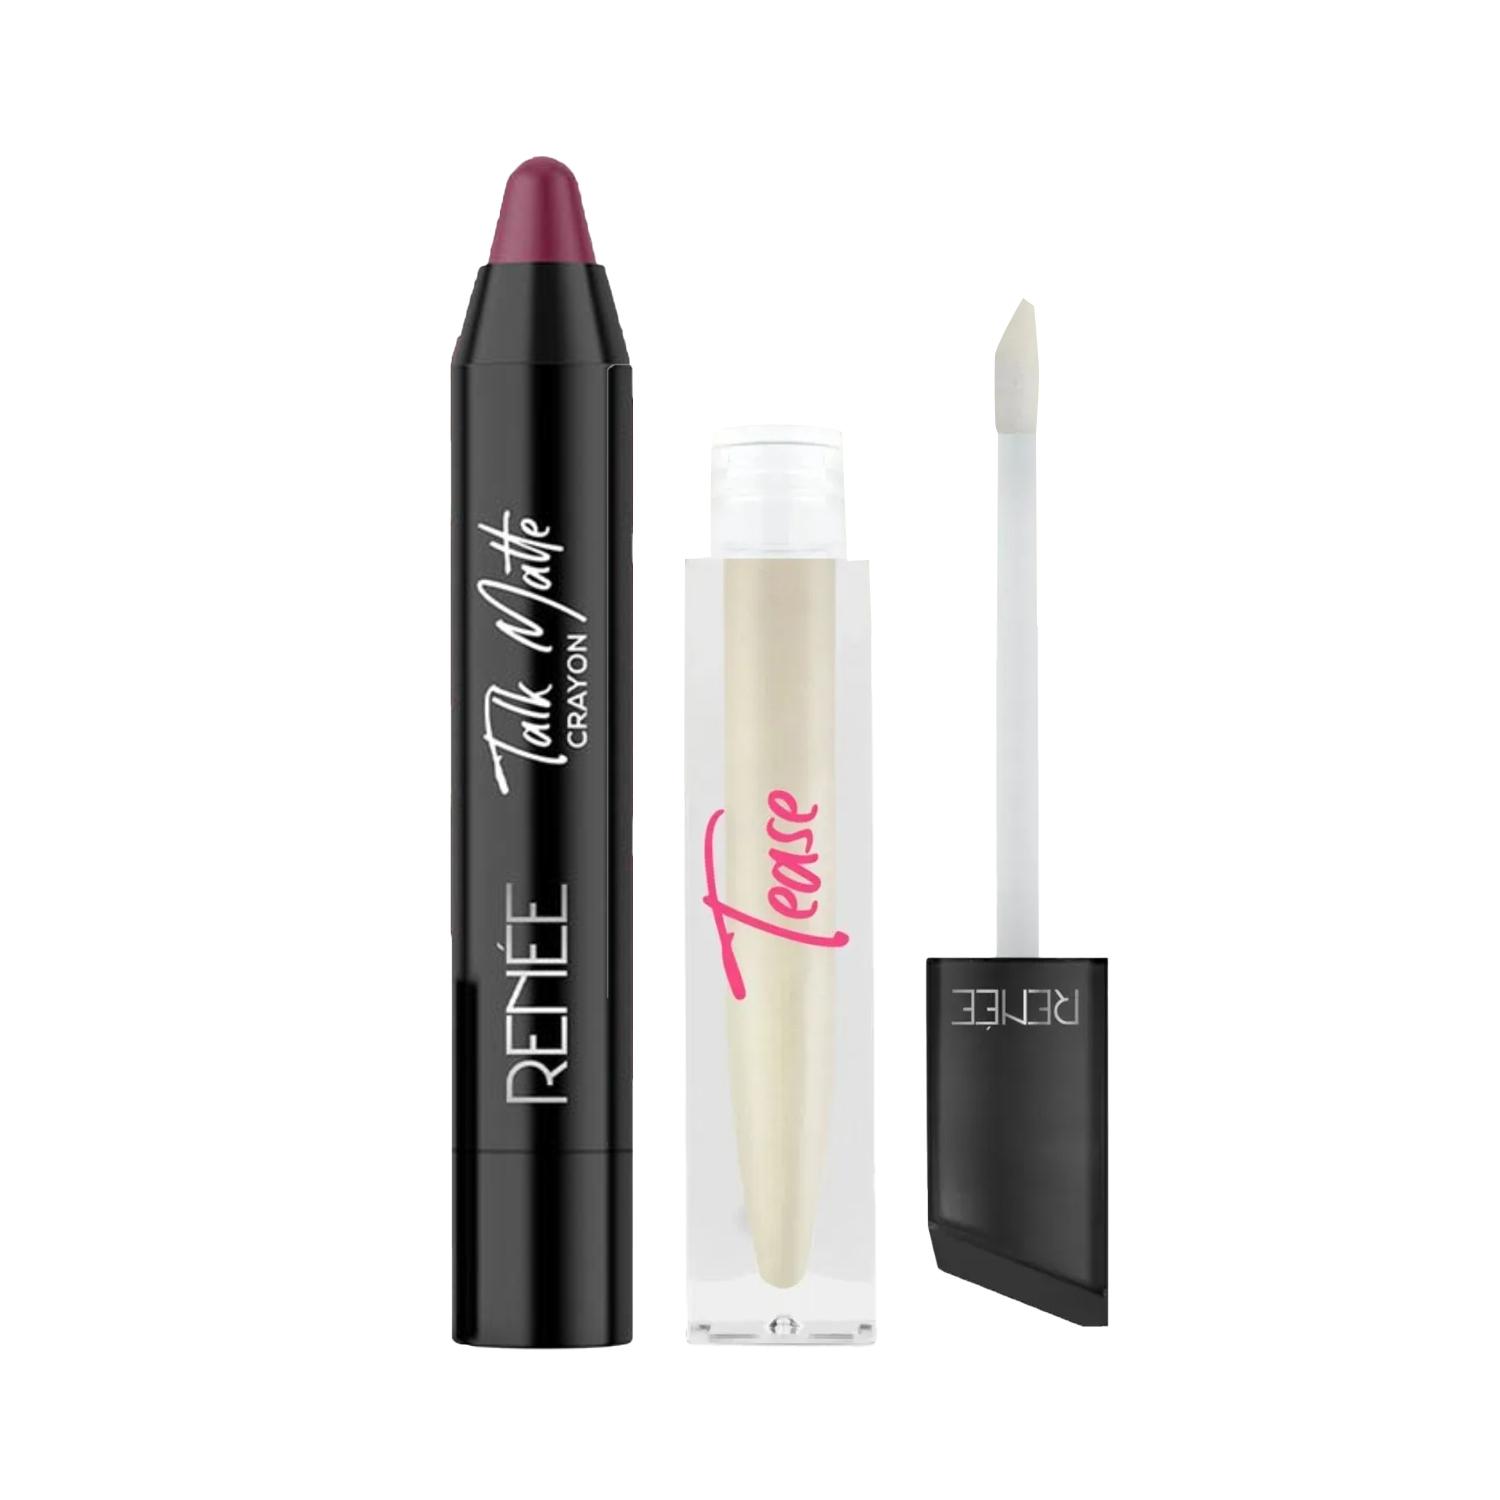 RENEE | RENEE Color Crush Lip Duo for Every Mood Combo - Lipstick + Lip Plumper